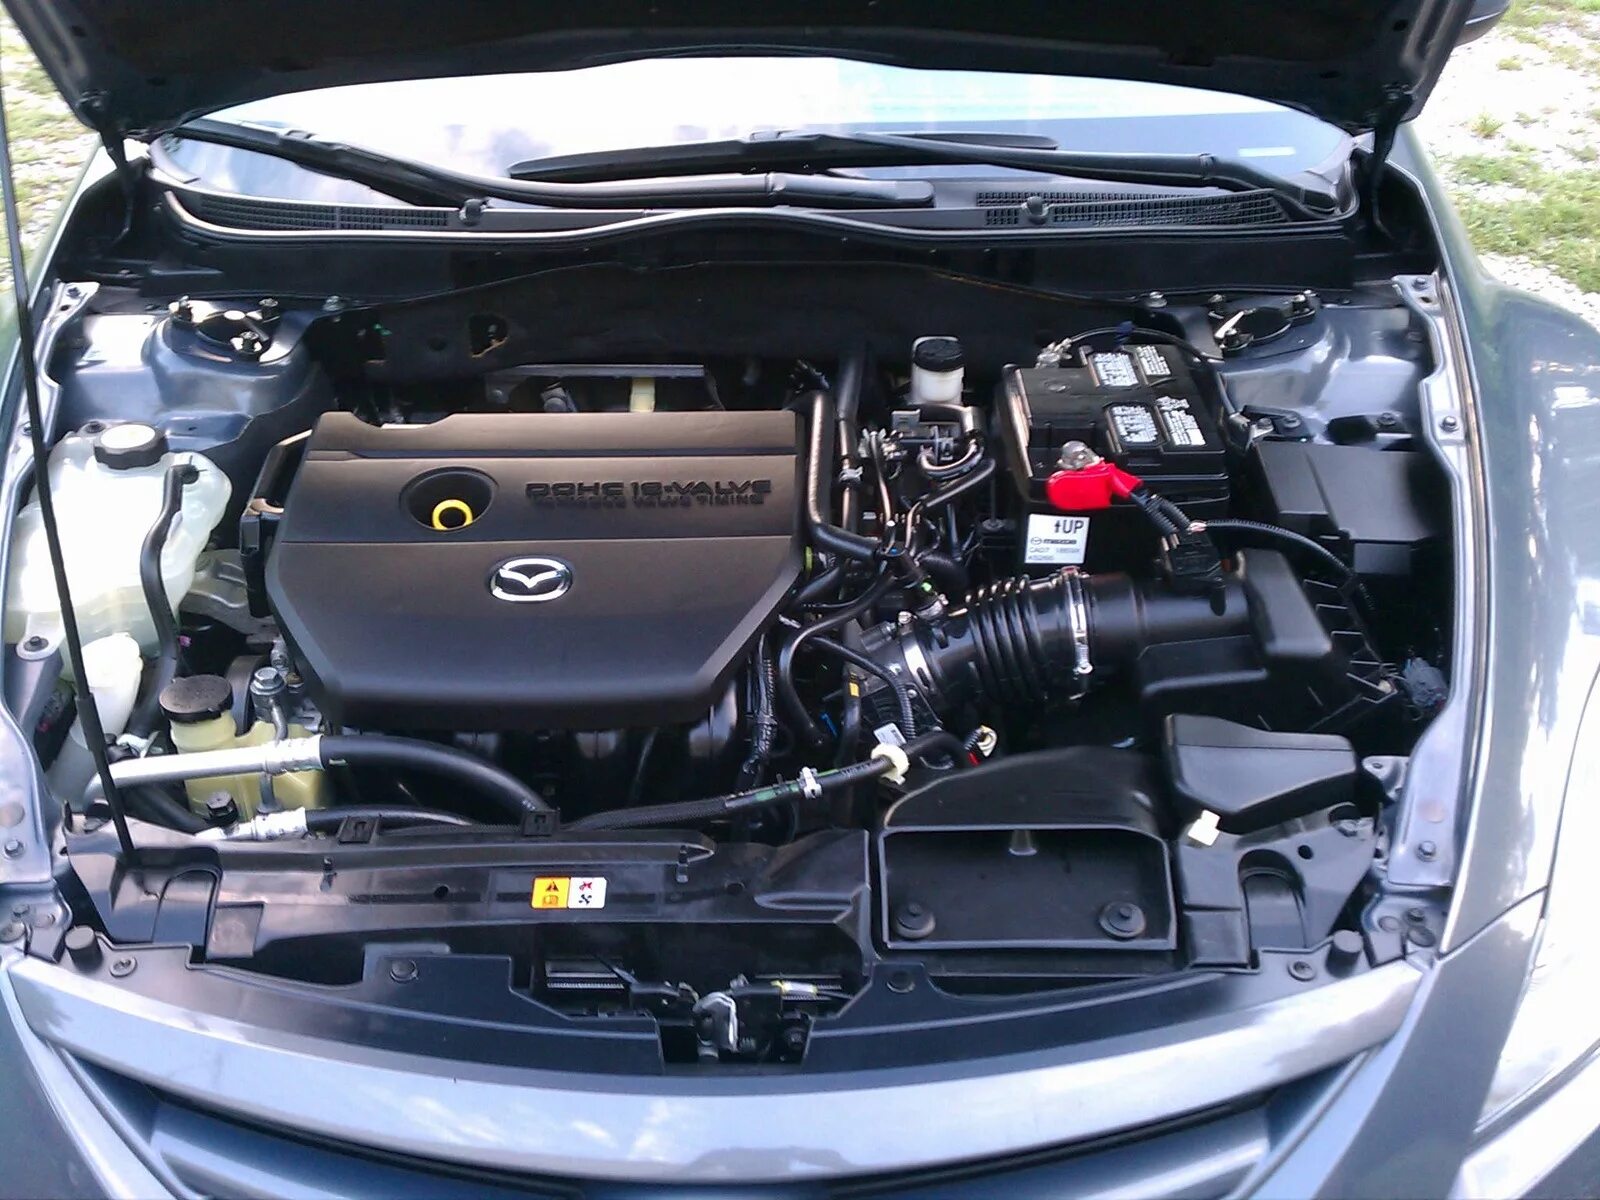 Двигатель мазда 6 2 литра. Mazda 6 2008 мотор. Мотор Мазда 6 2.0 GH. Mazda 6 GH 2.0 двигатель. Mazda 6 2008 2.5 мотор.